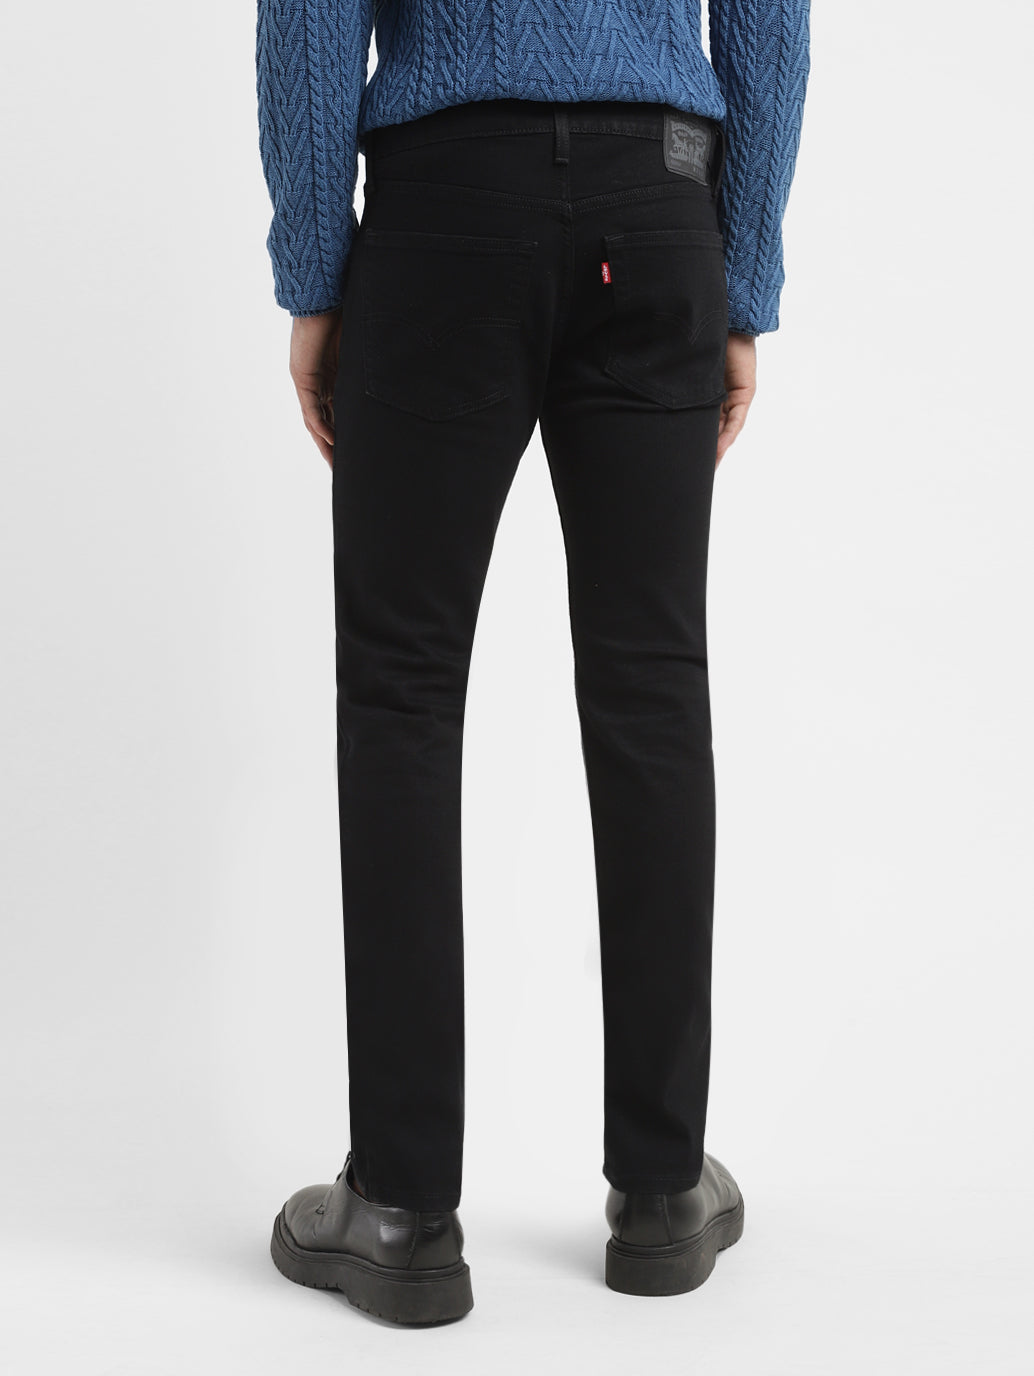 Men's 65504 Black Skinny Fit Jeans